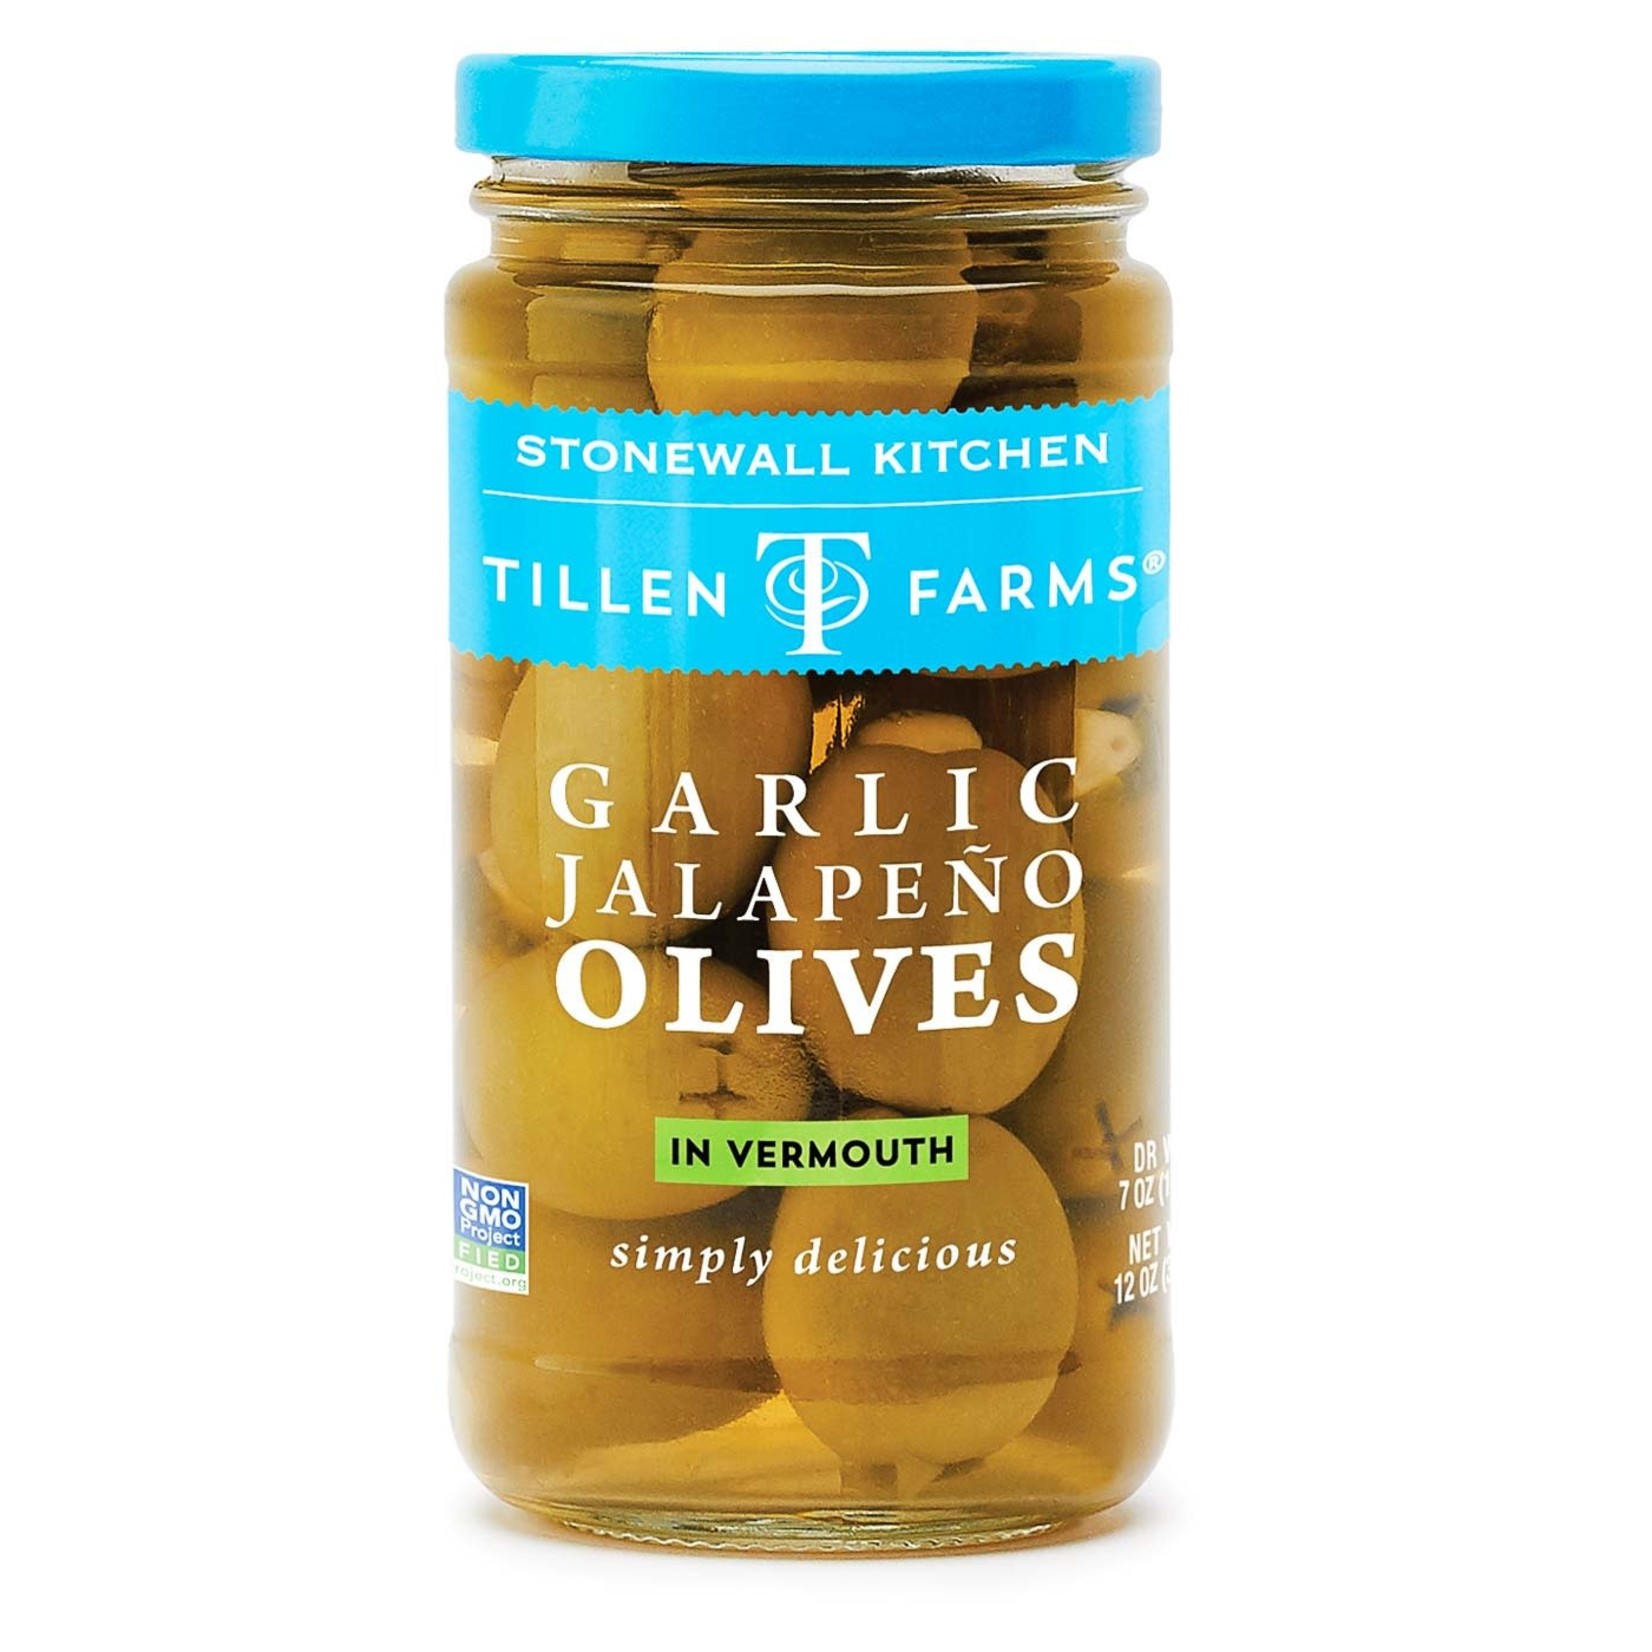 Stonewall Kitchen Tillen Farms Garlic Jalapeno Olives